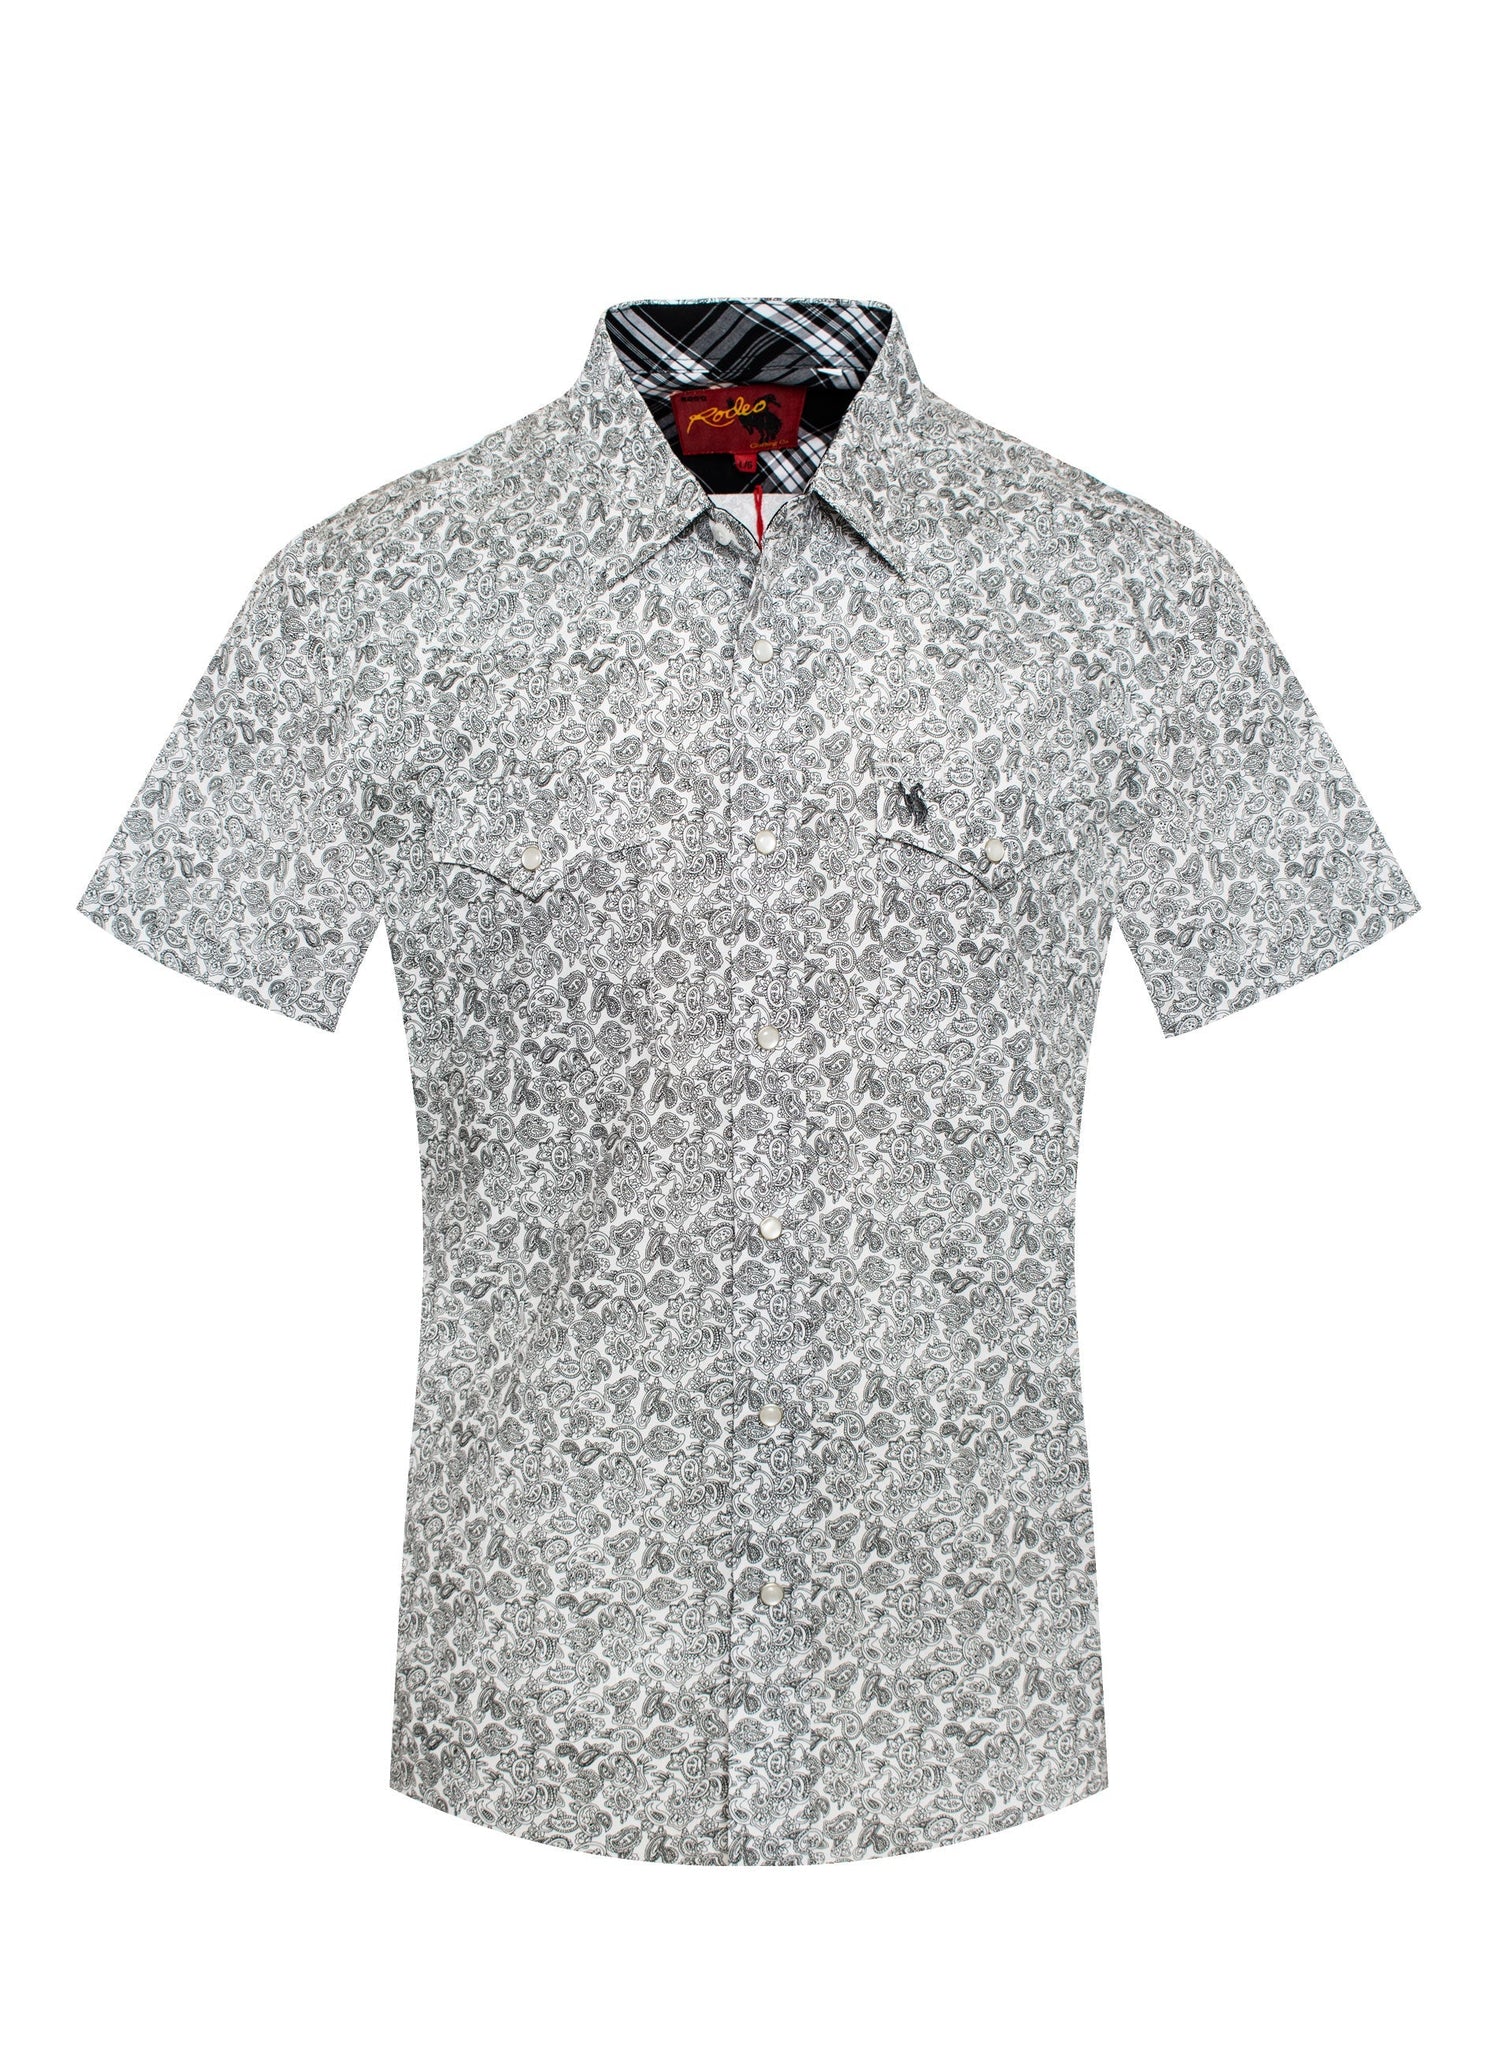 Men's Short Sleeve Pearl Snap Print Shirt -PS100S-171